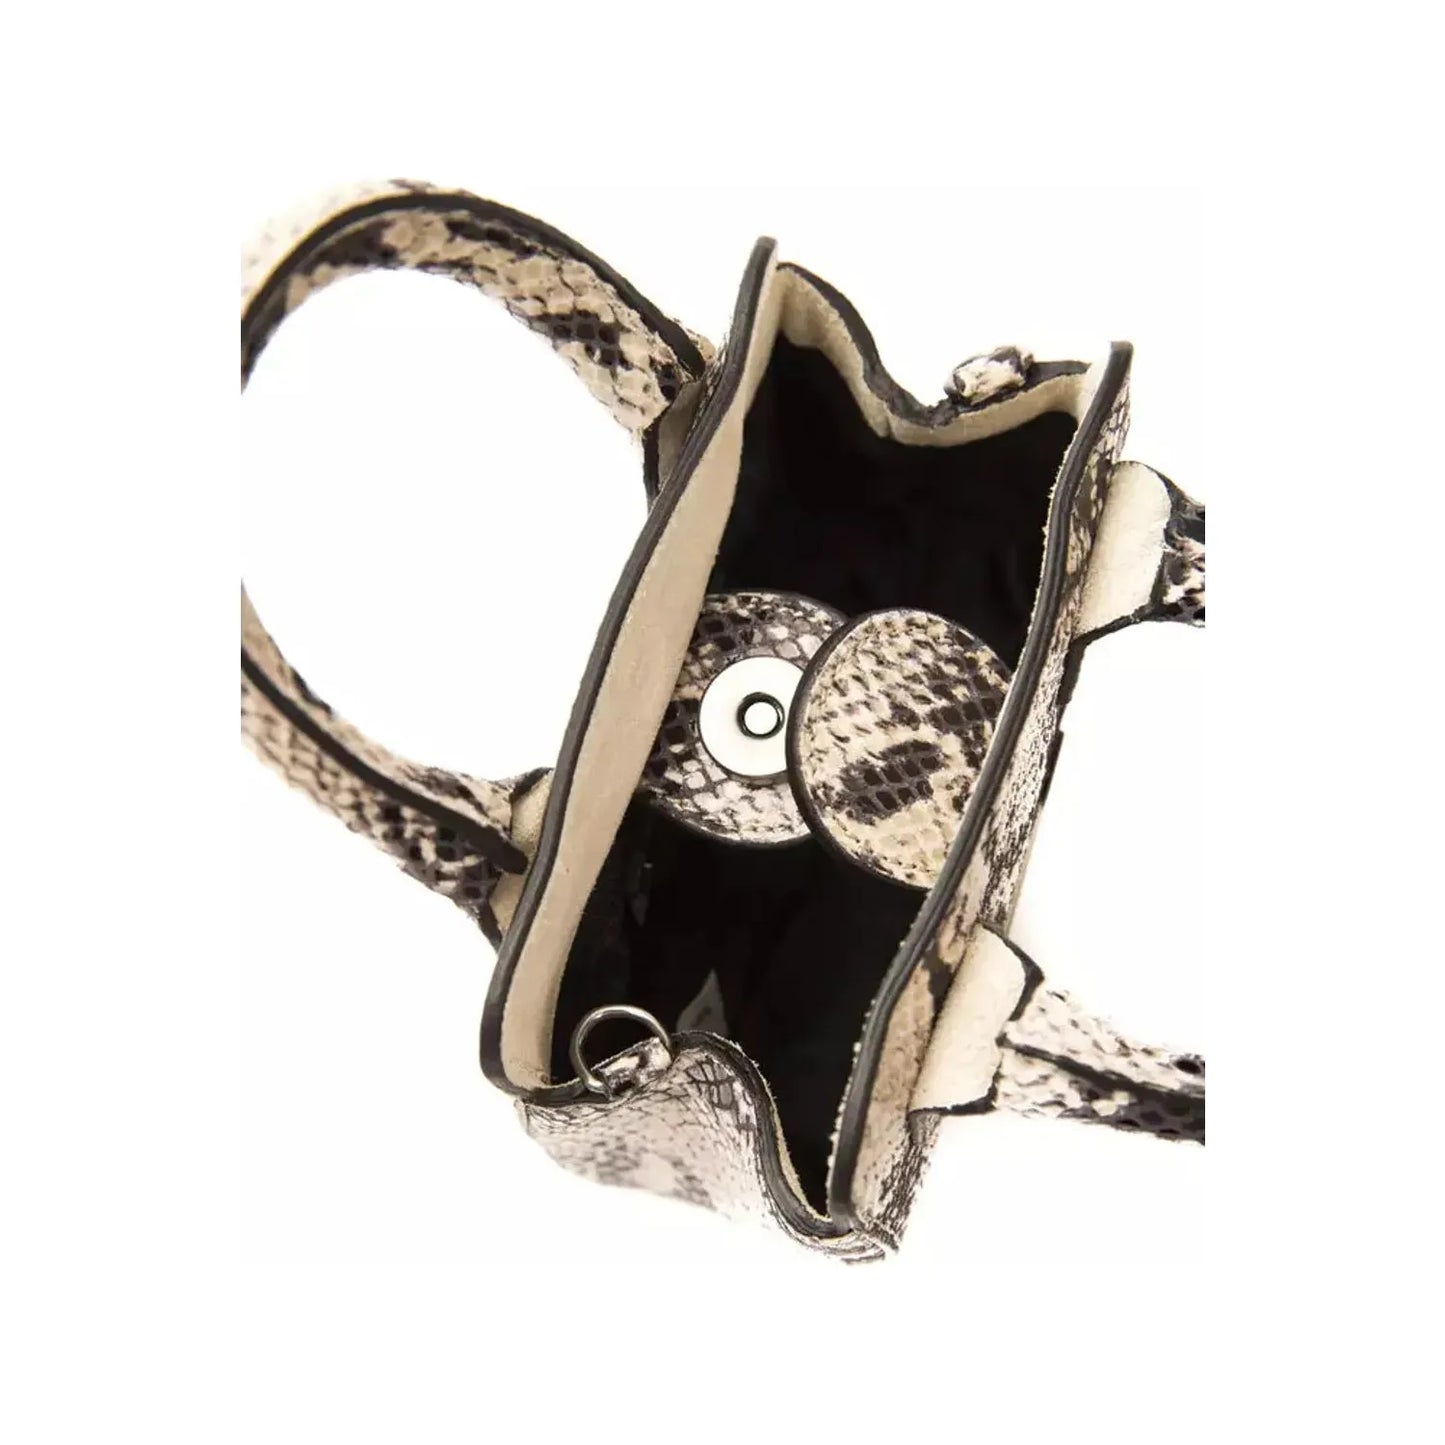 Pompei Donatella Chic Gray Python Mini Tote With Adjustable Straps roccia-stone-handbag